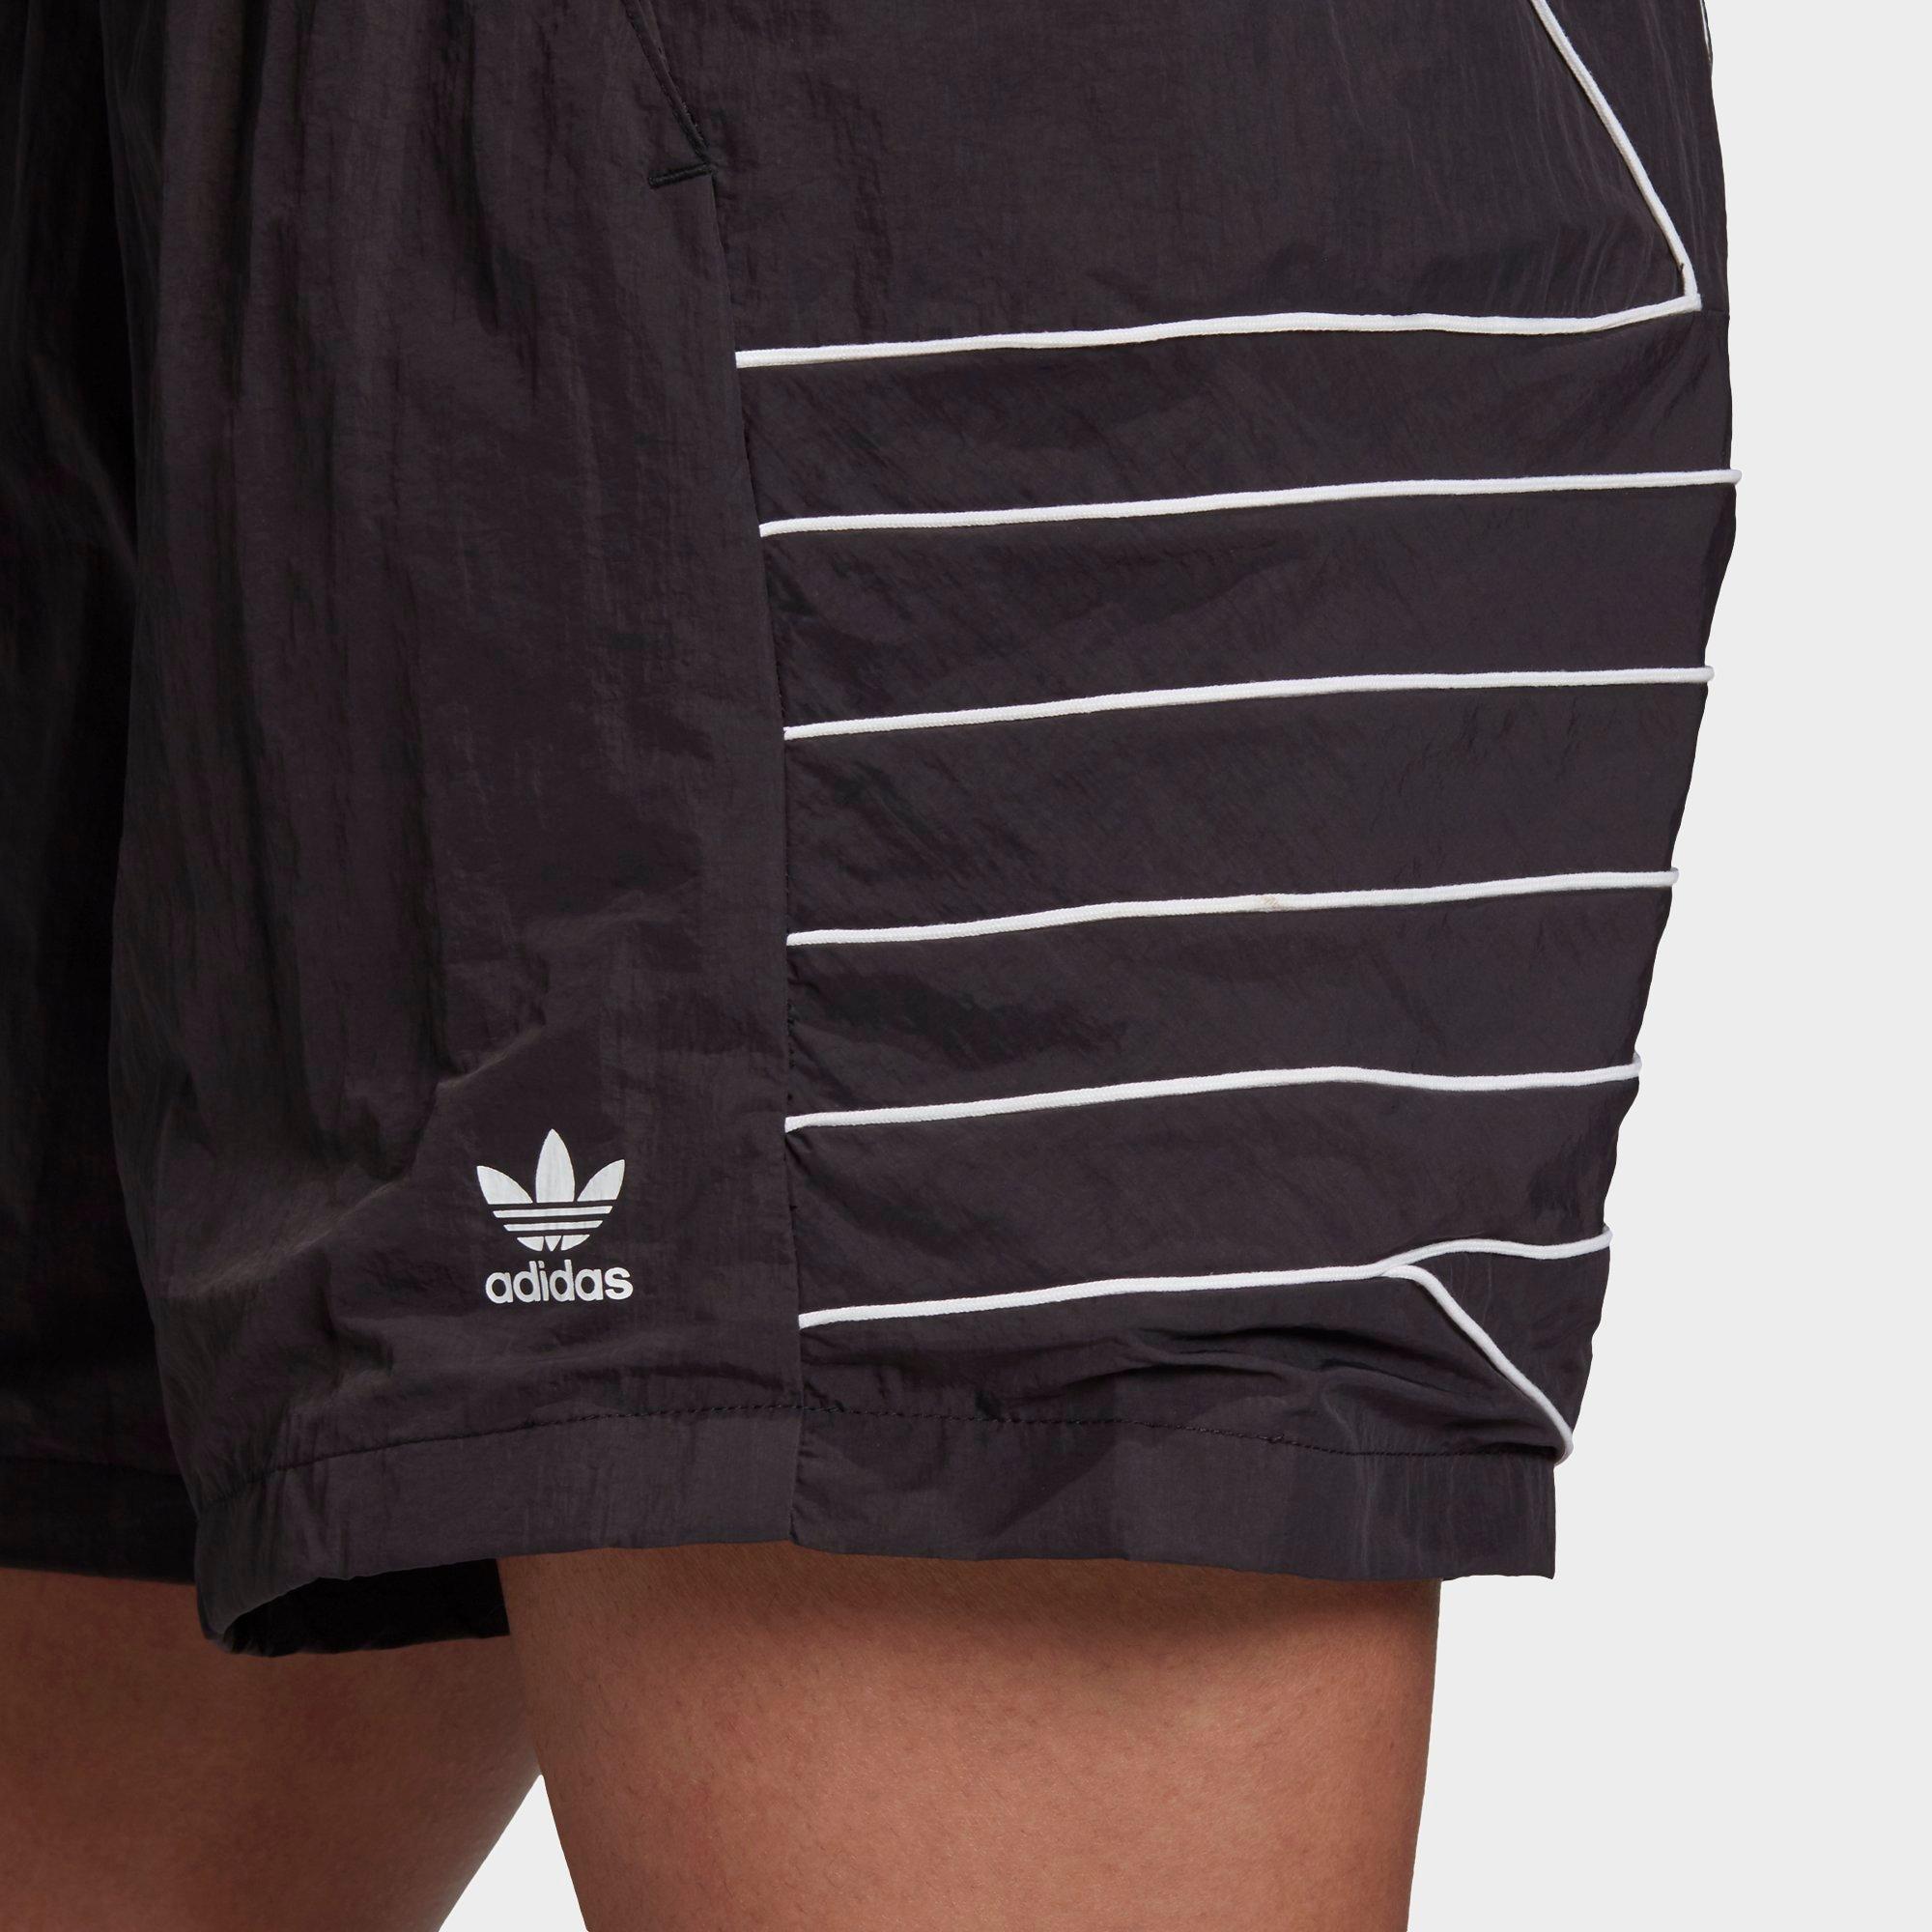 adidas originals large logo shorts